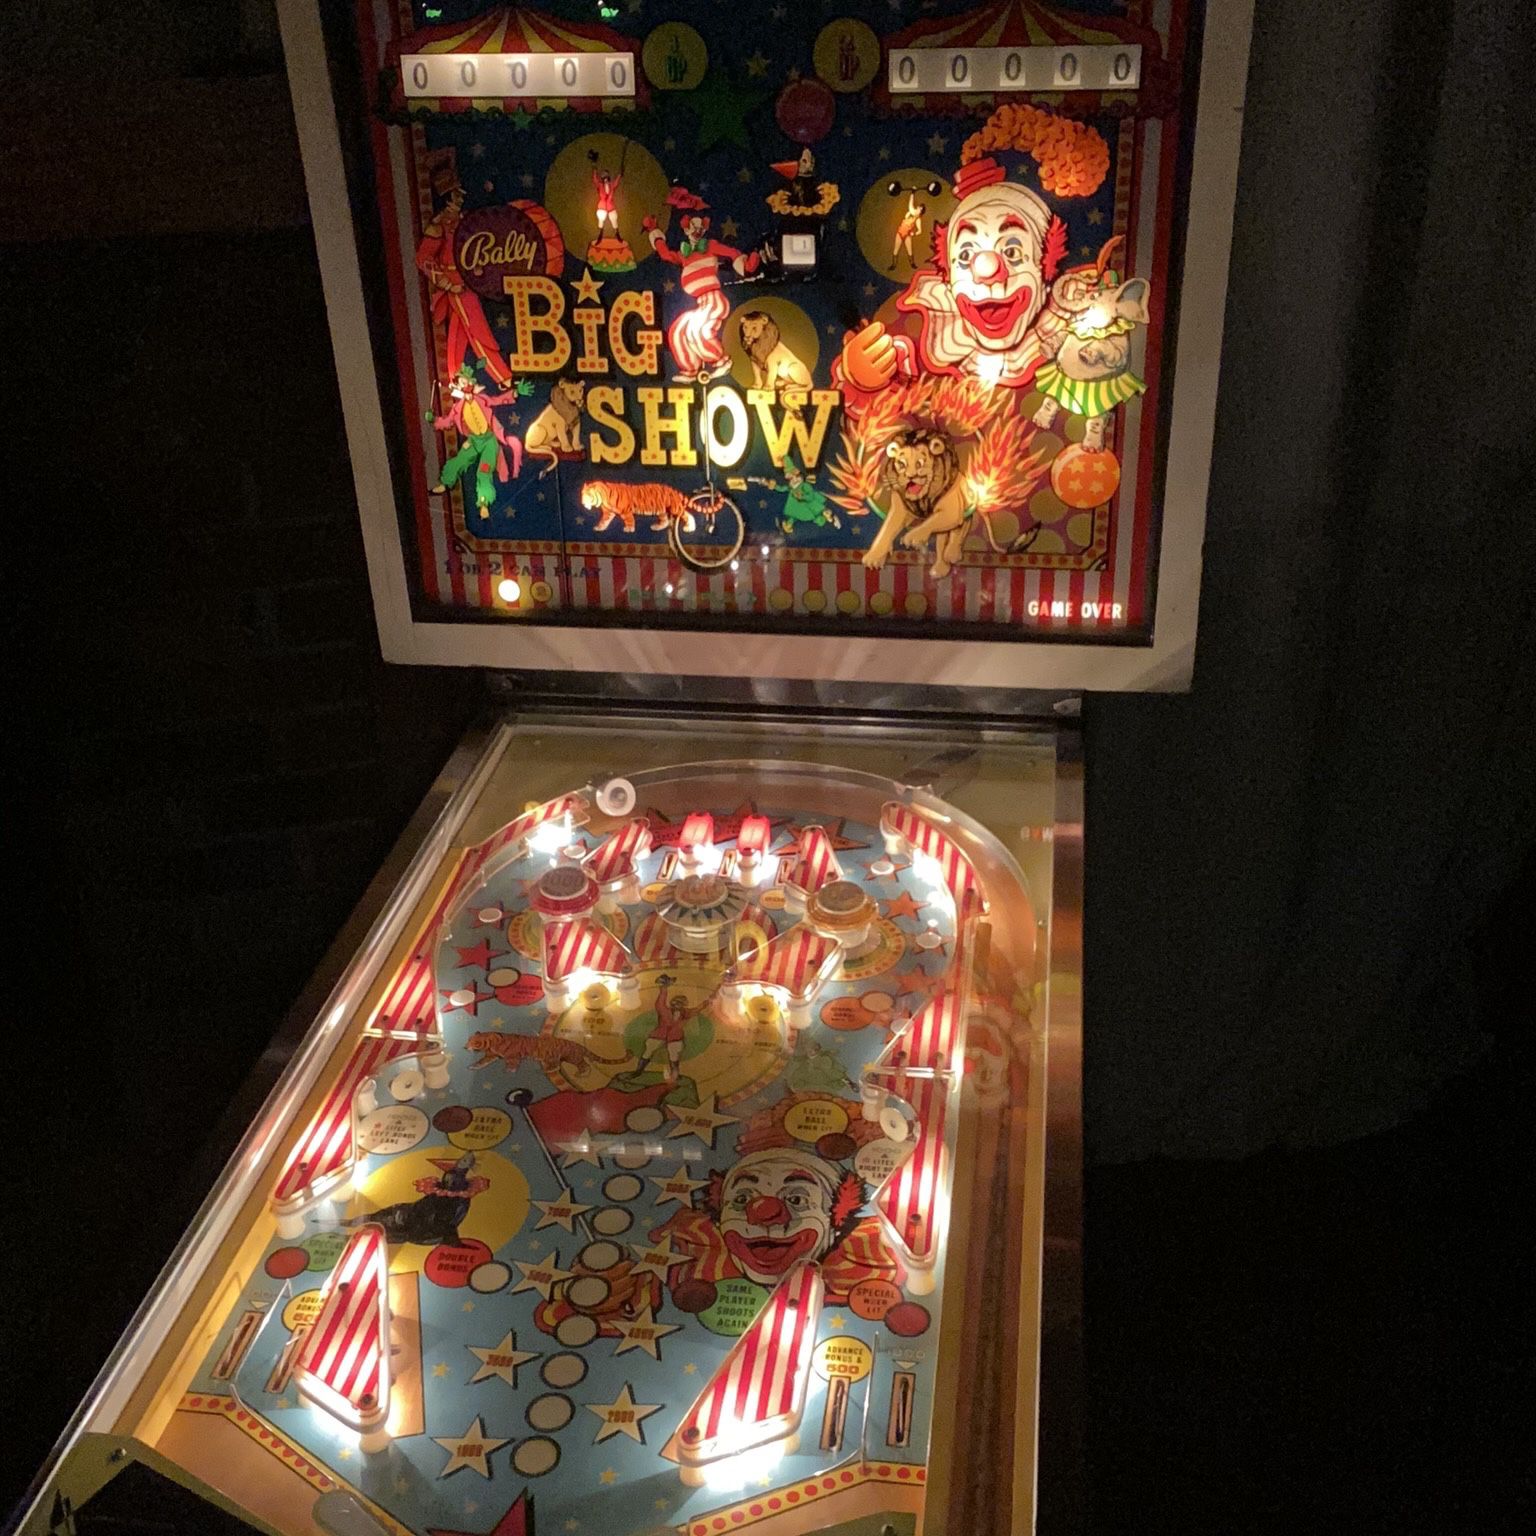 1974 “Big Show” Pinball Machine by Bally Manufacturing Co